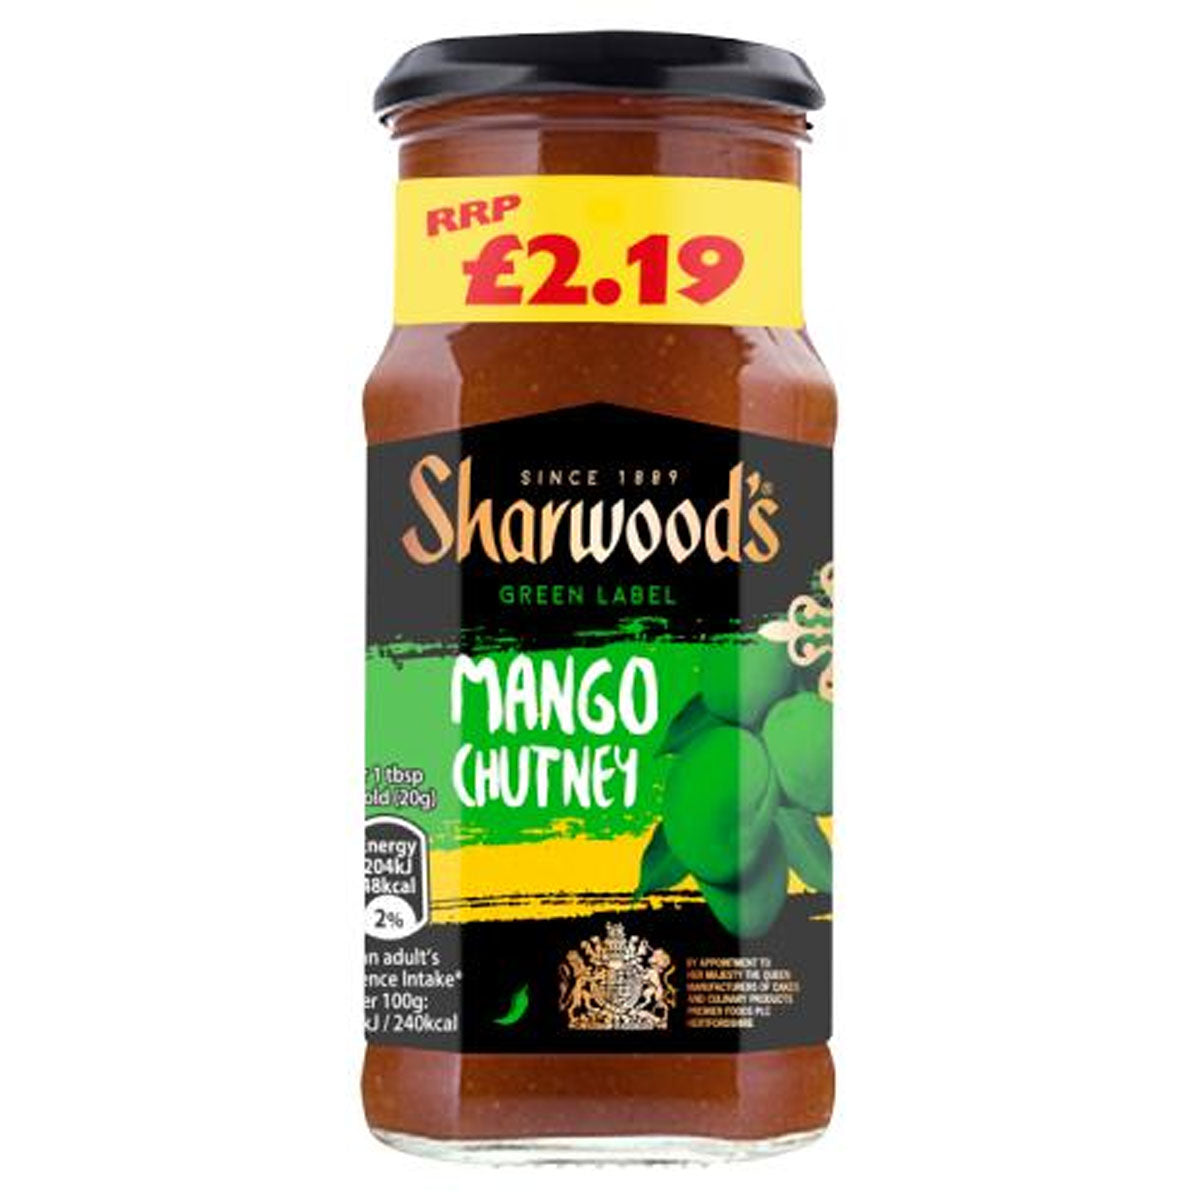 Sharwood's - Green Label Mango Chutney - 227g - Continental Food Store